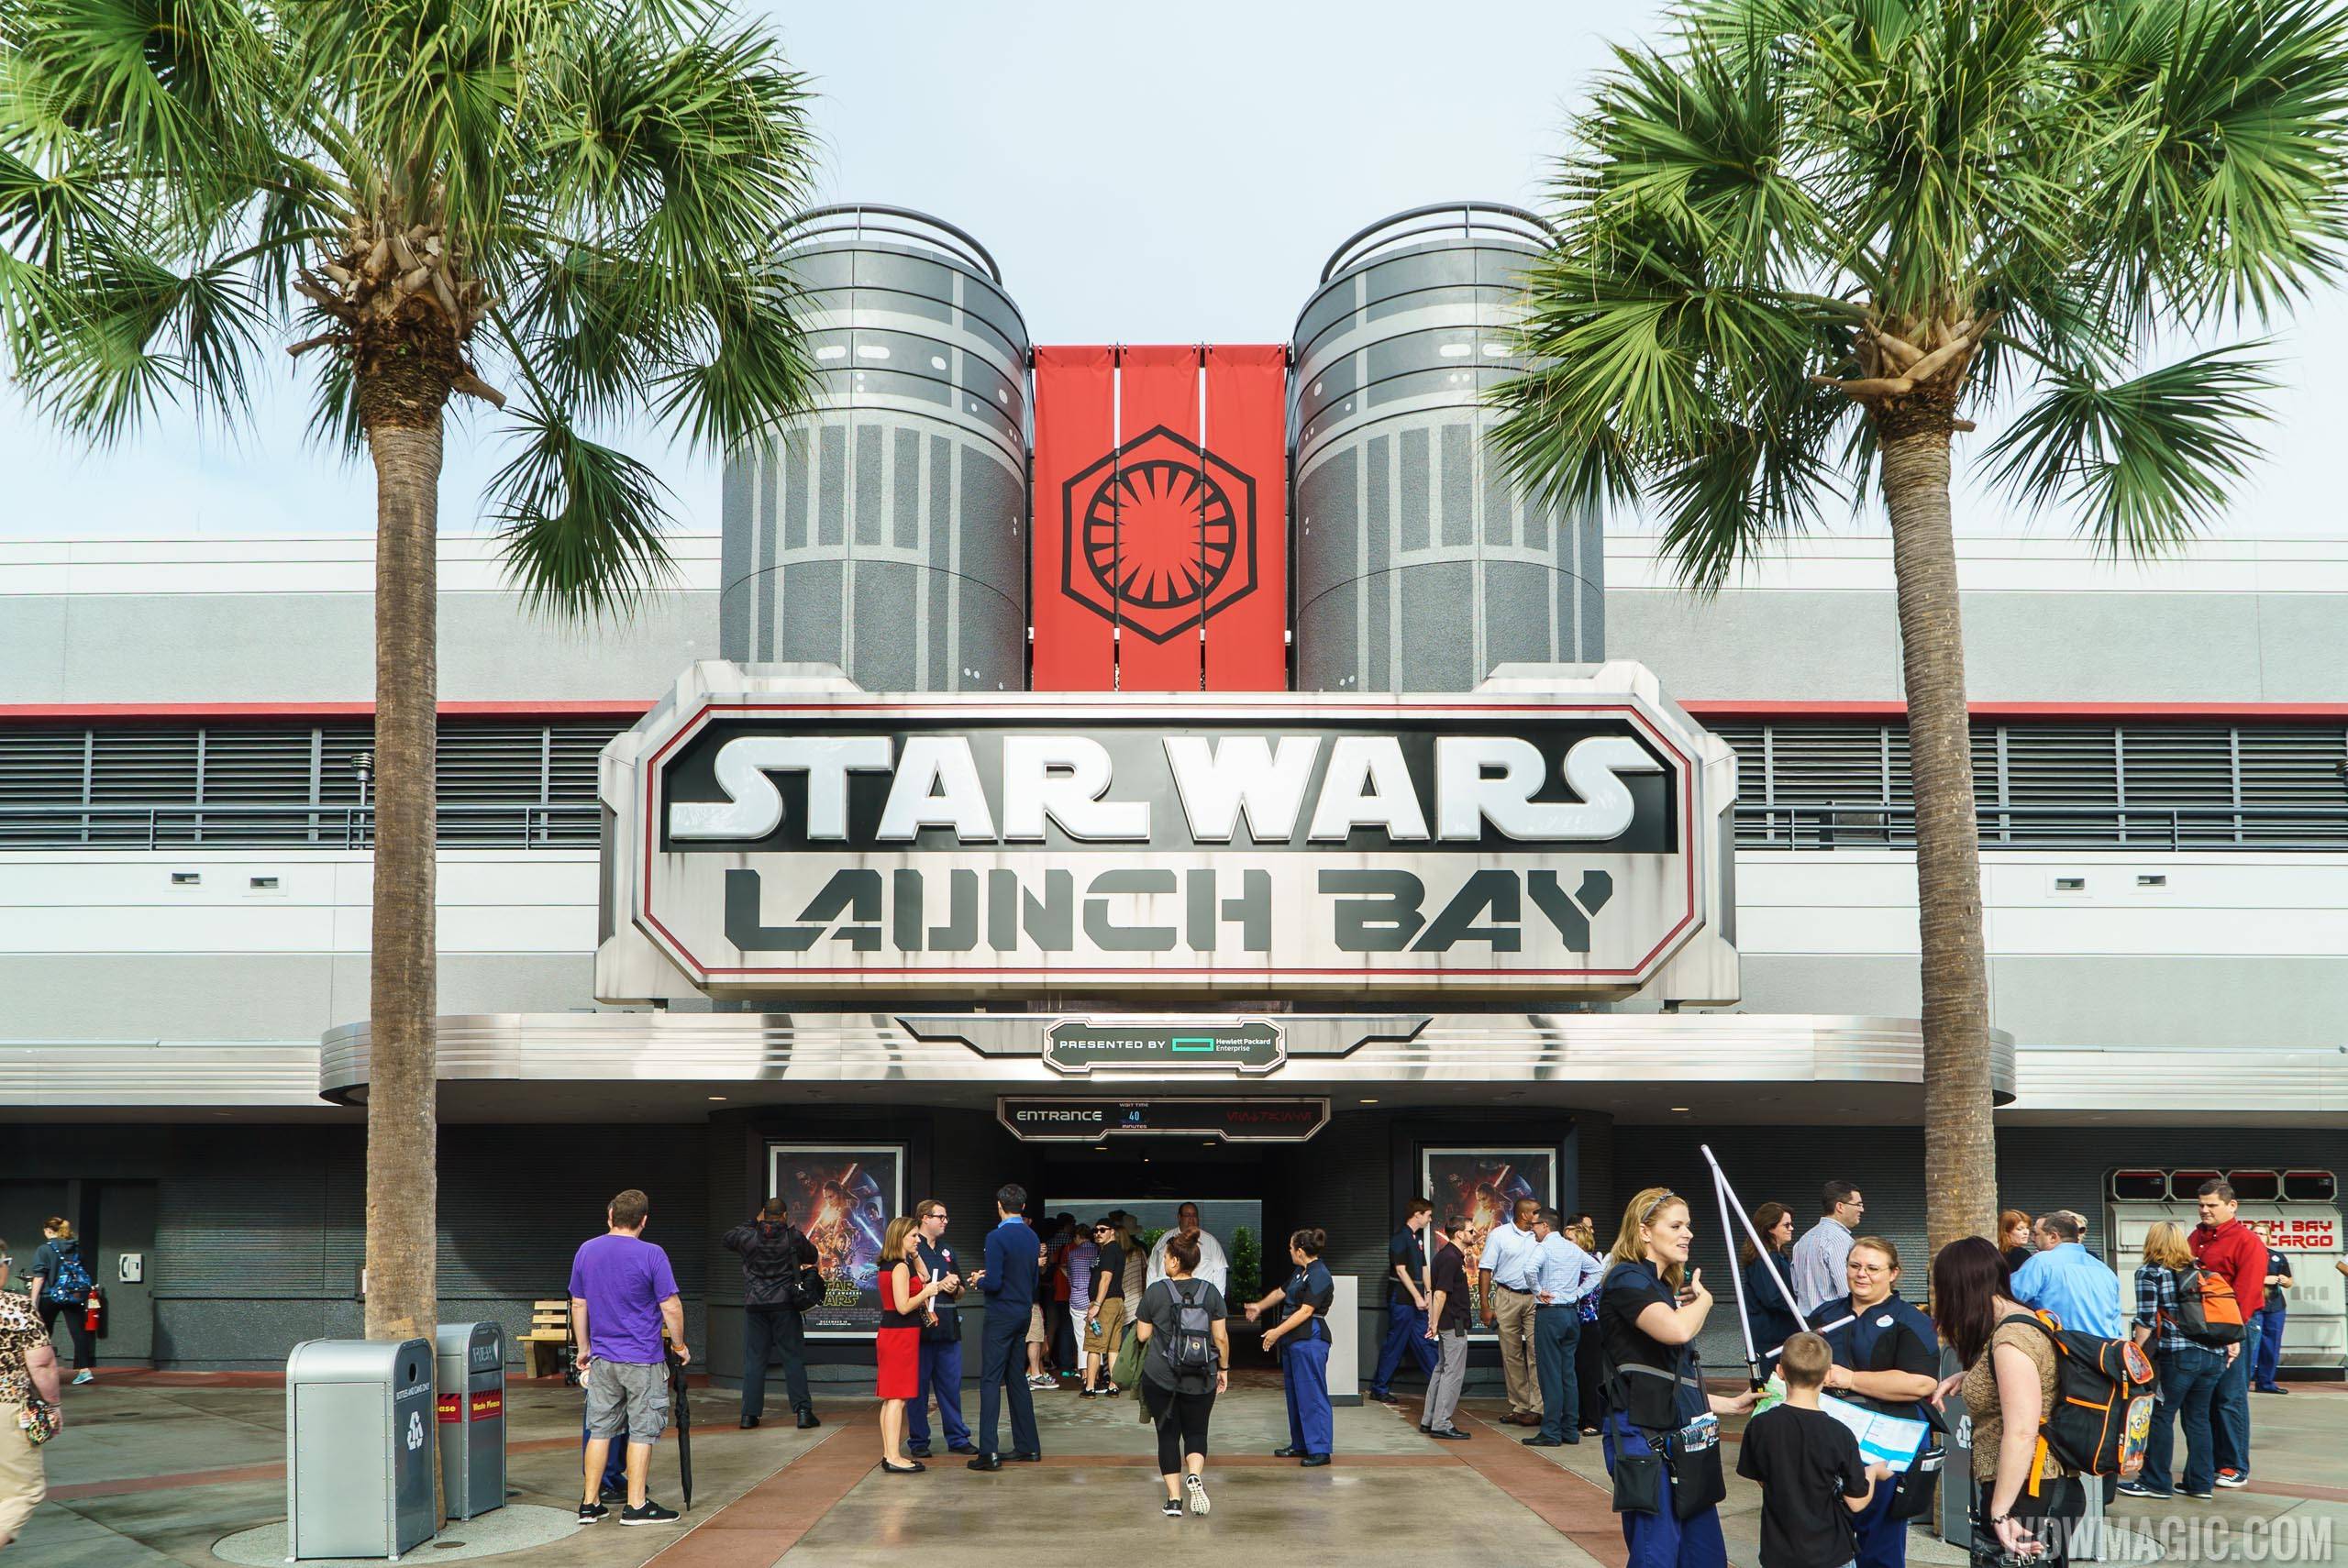 Star Wars Launch Bay - Entrance